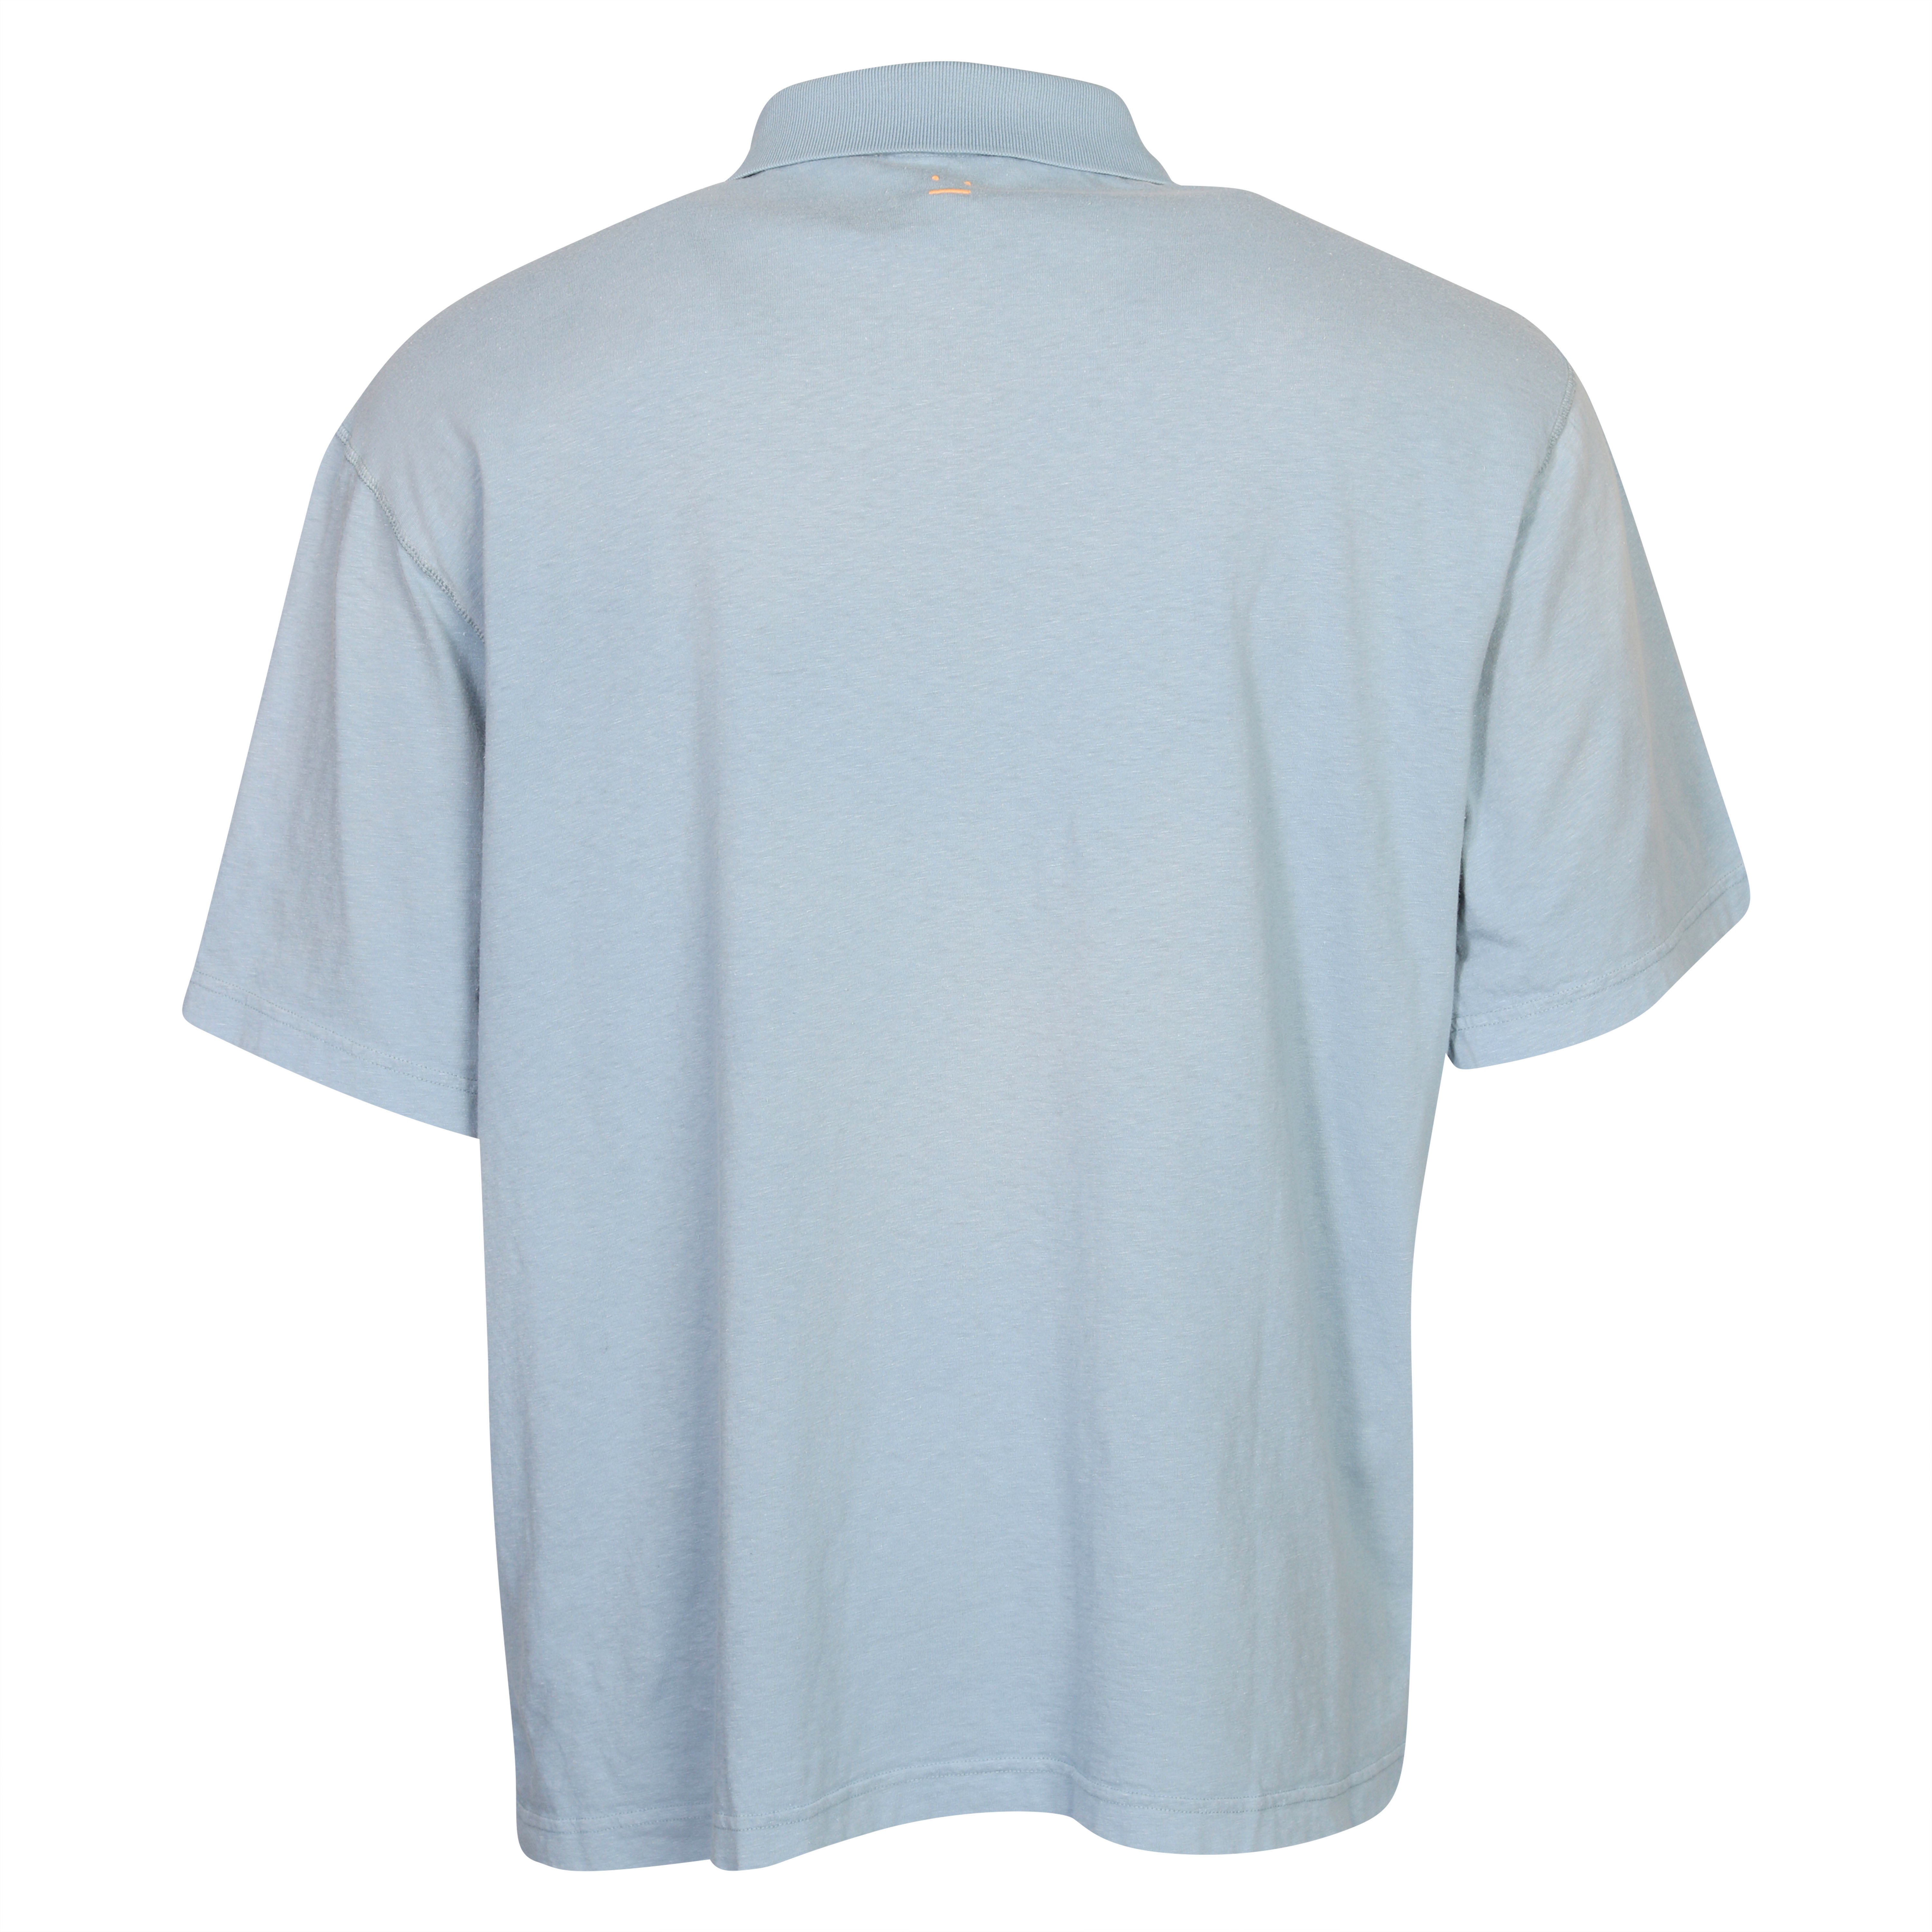 Acne Studios Face Polo Shirt in Dusty Blue